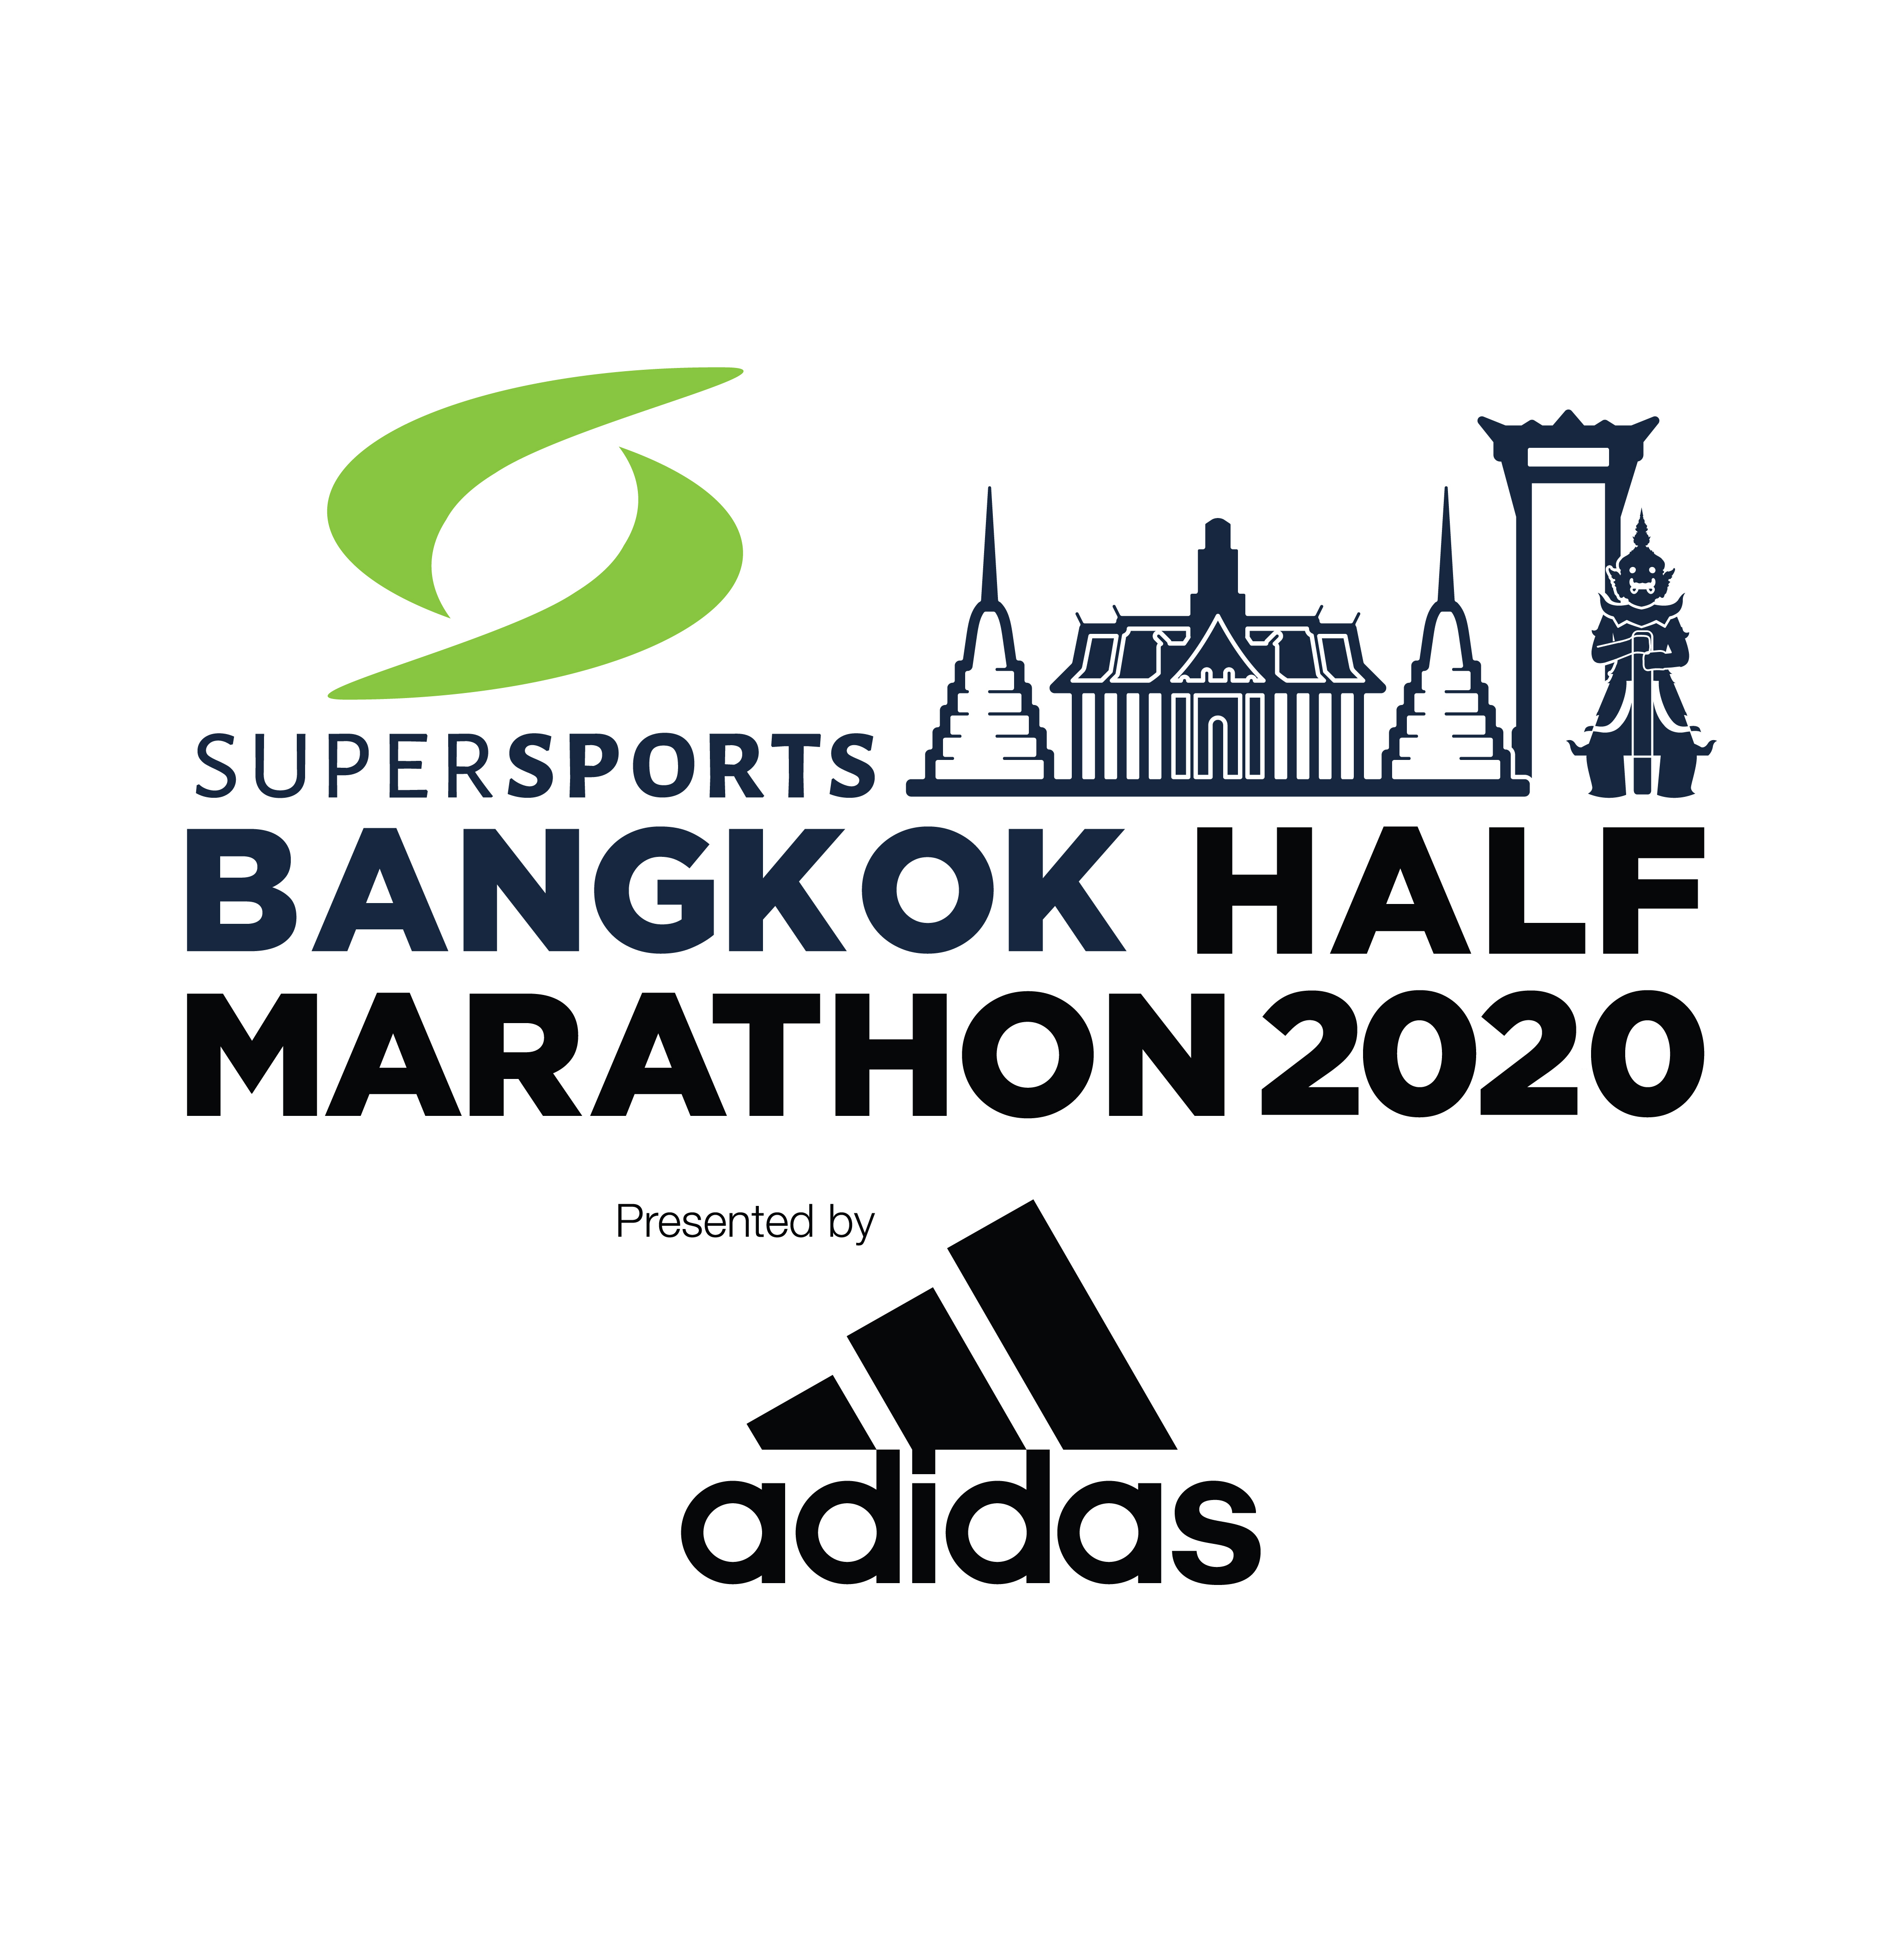 Supersports Bangkok Half Marathon 2020 